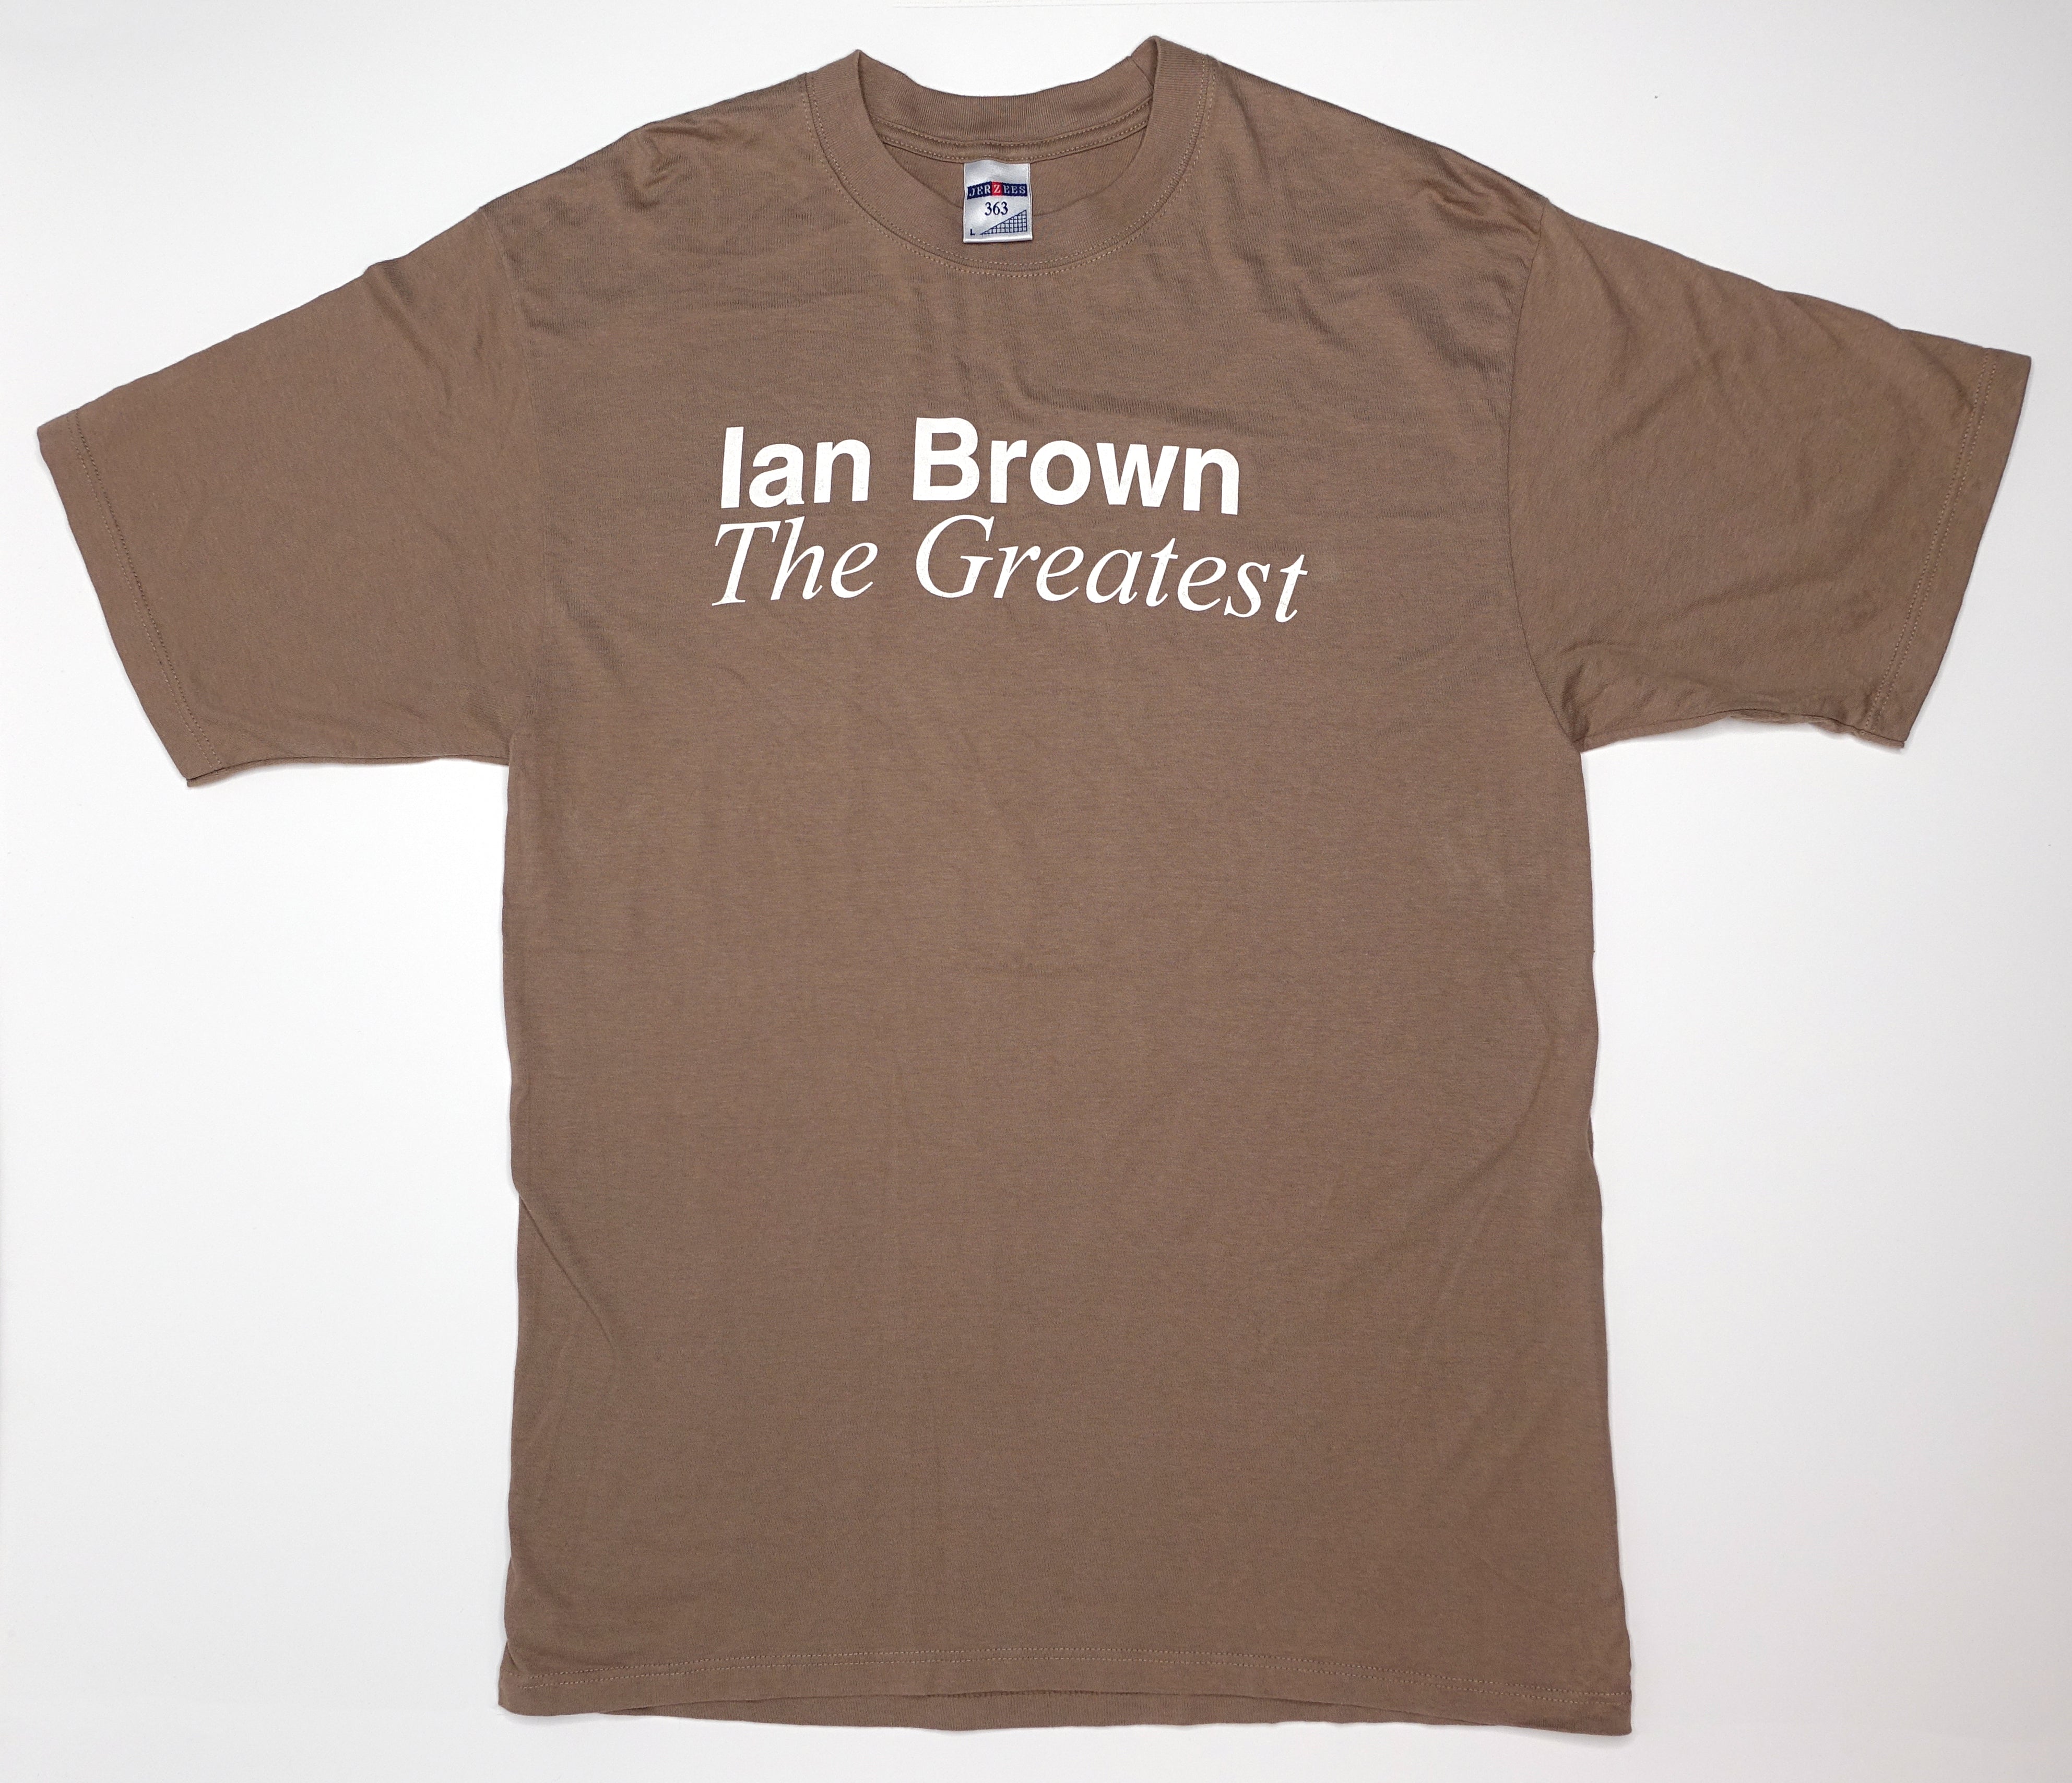 Ian Brown - The Greatest / Golden Greats 1999 UK Tour Shirt Size Large